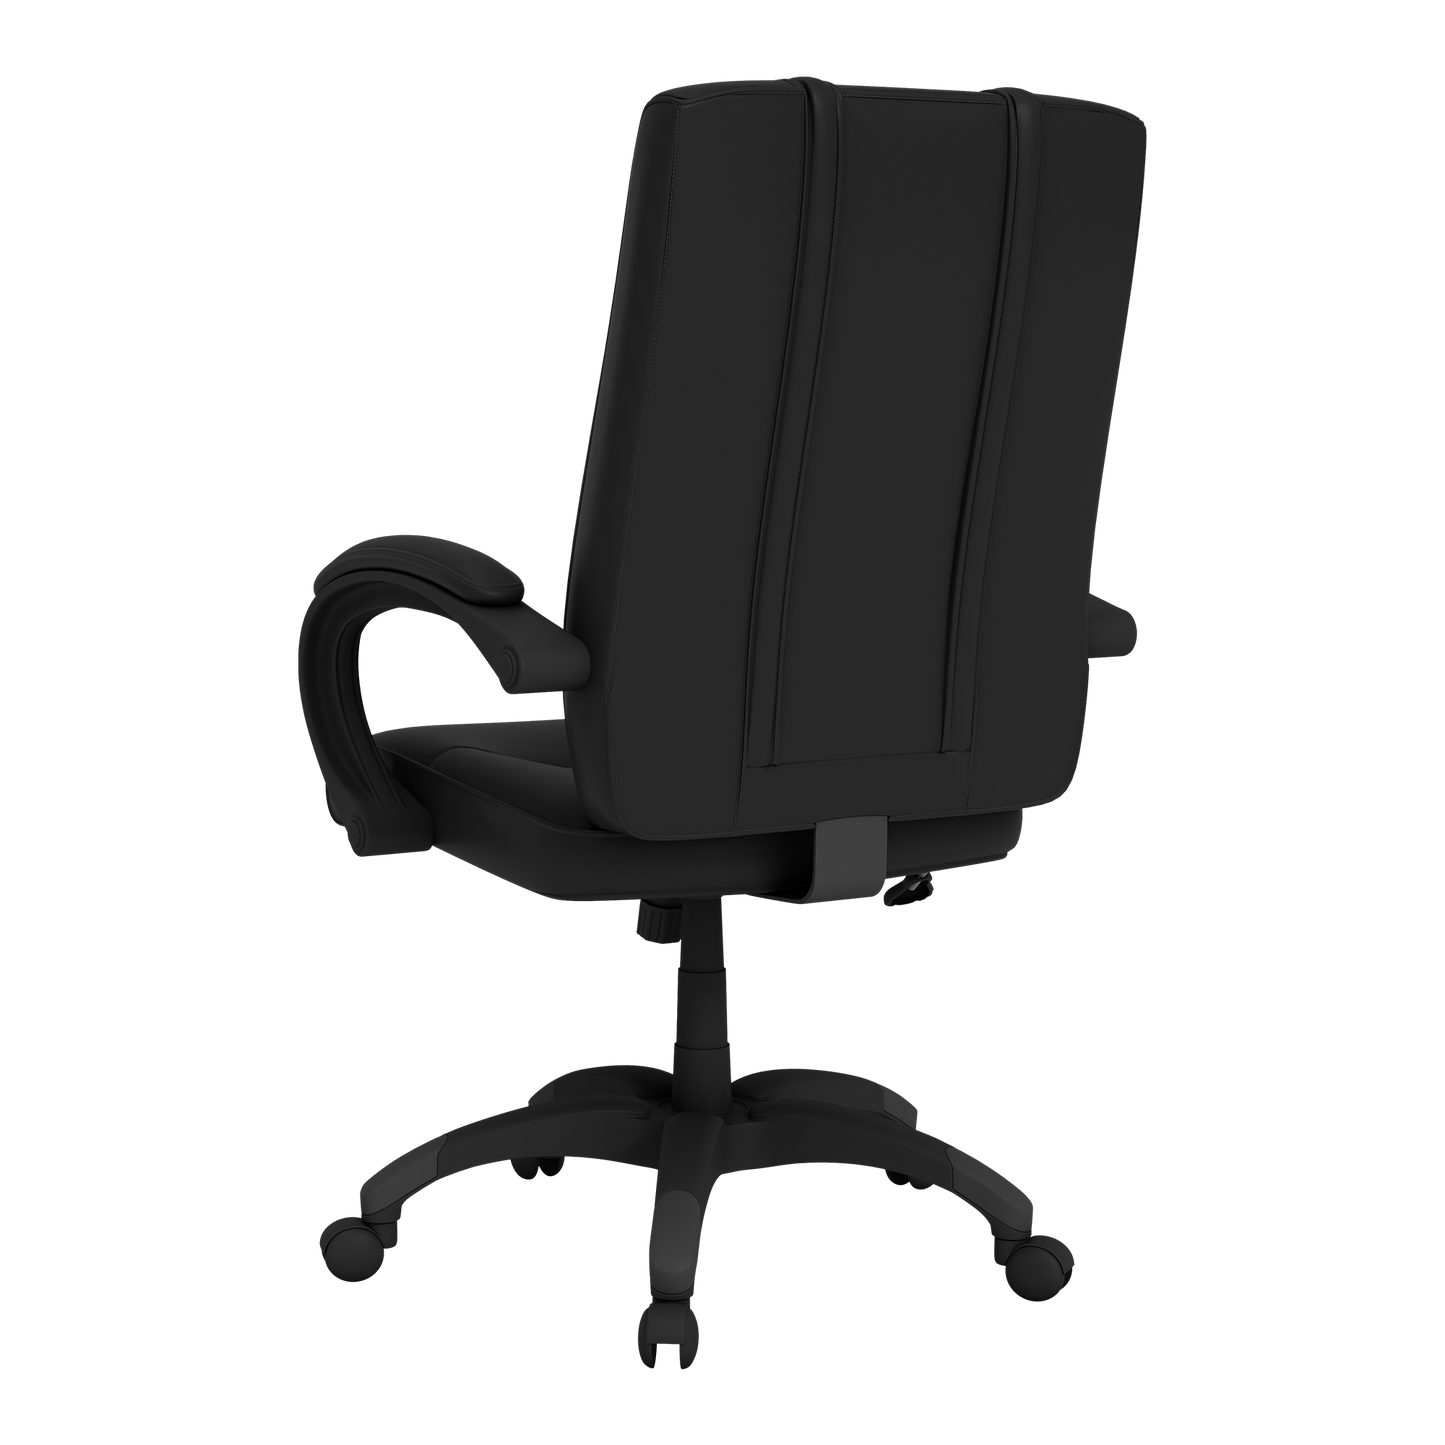 Office Chair 1000 with Villanova Wildcats Logo